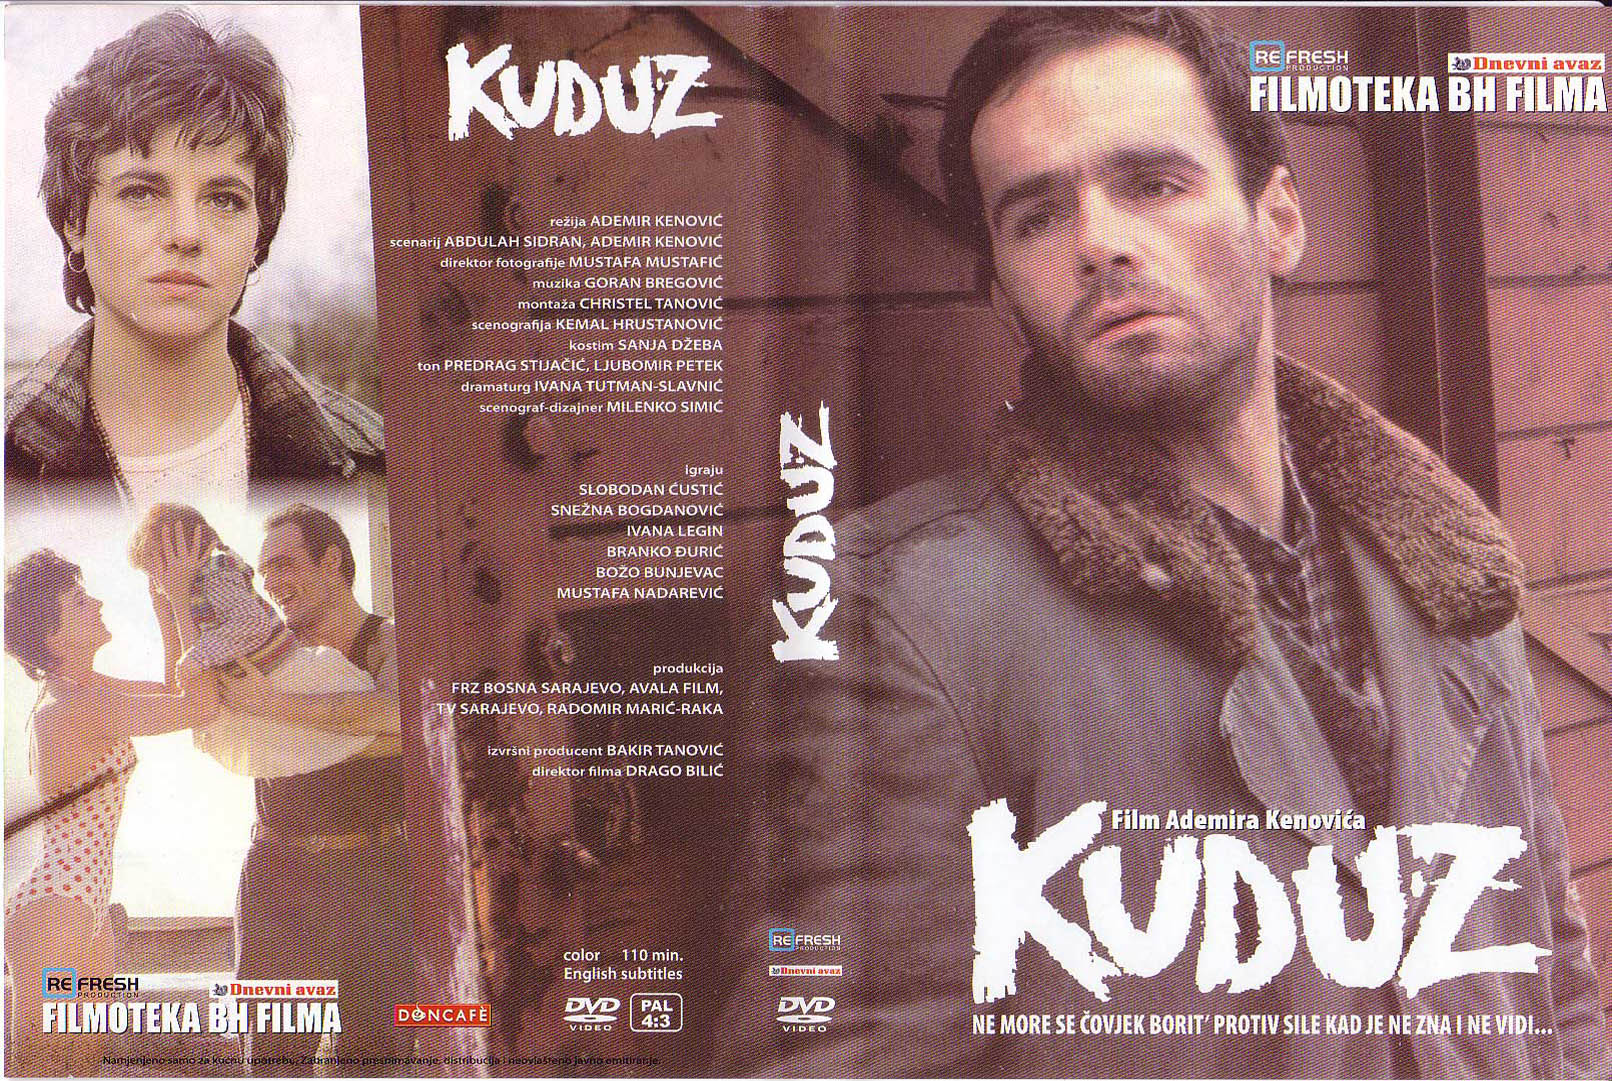 Click to view full size image -  DVD Cover - 0-9 - DVD - KUDUZ - DVD - KUDUZ.jpg